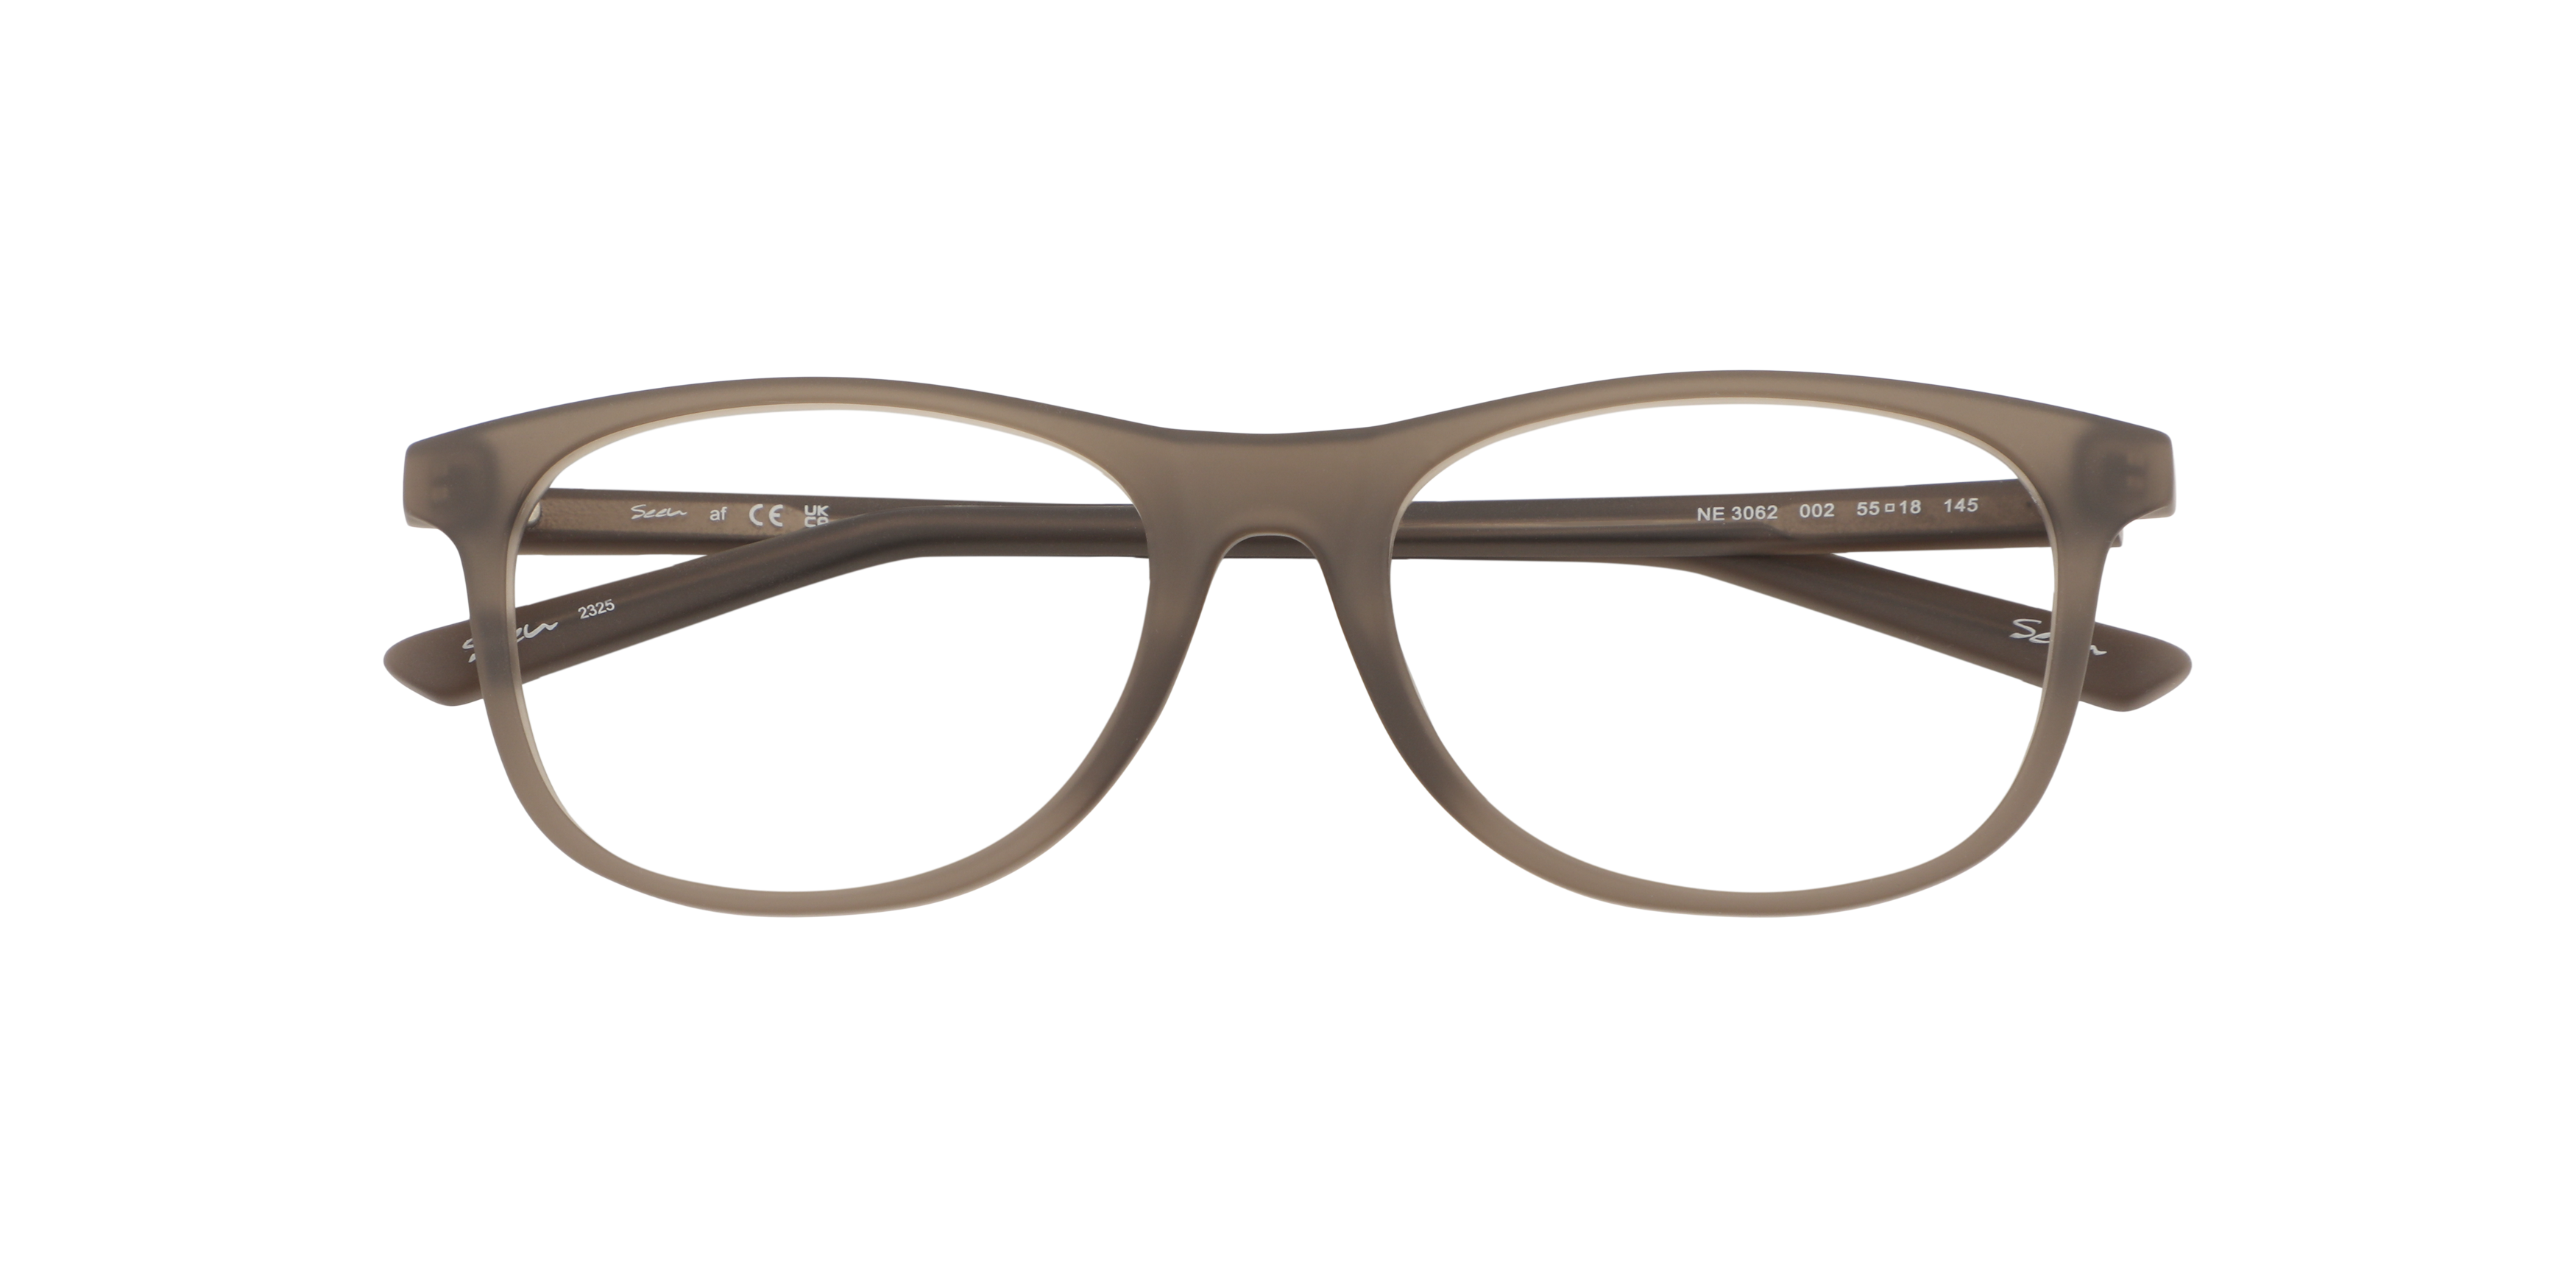 Folded Seen NE3062 Glasses Transparent / Transparent, Grey